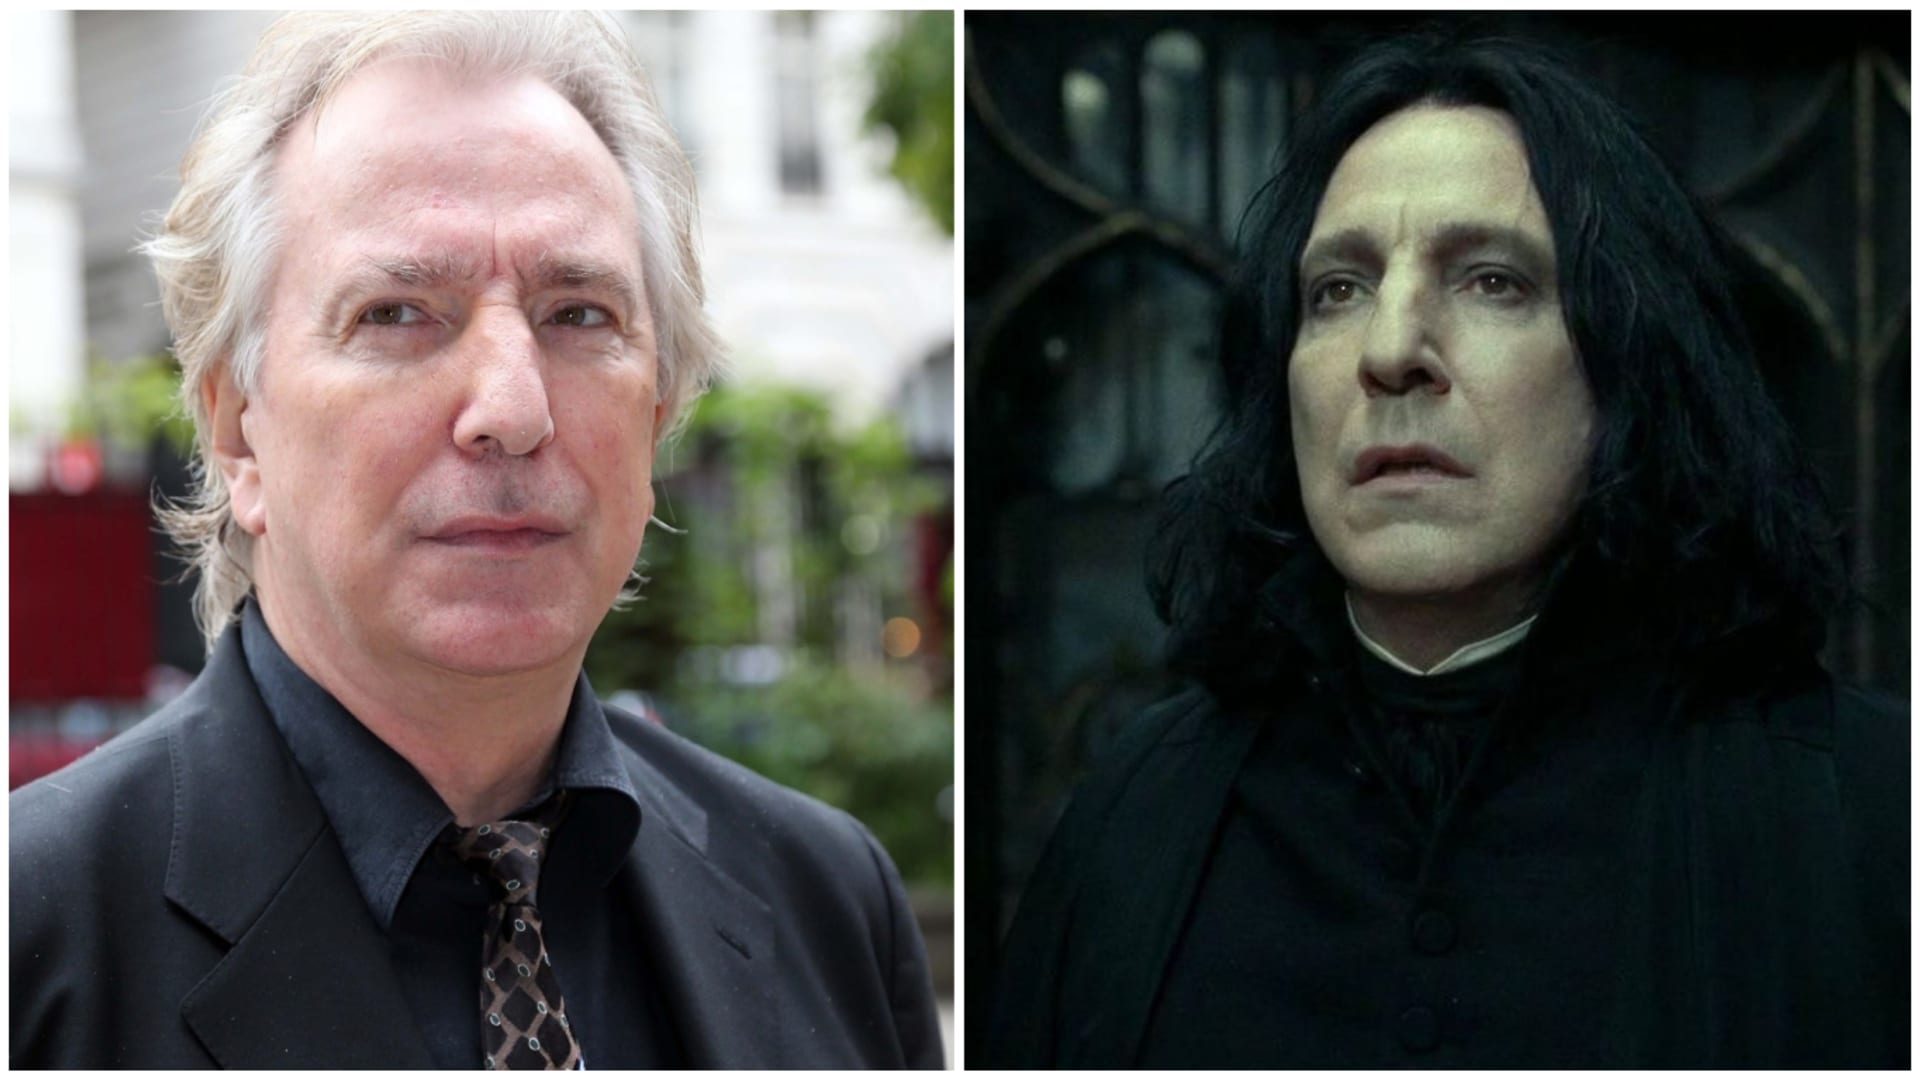 Alan Rickman alias Severus Snape